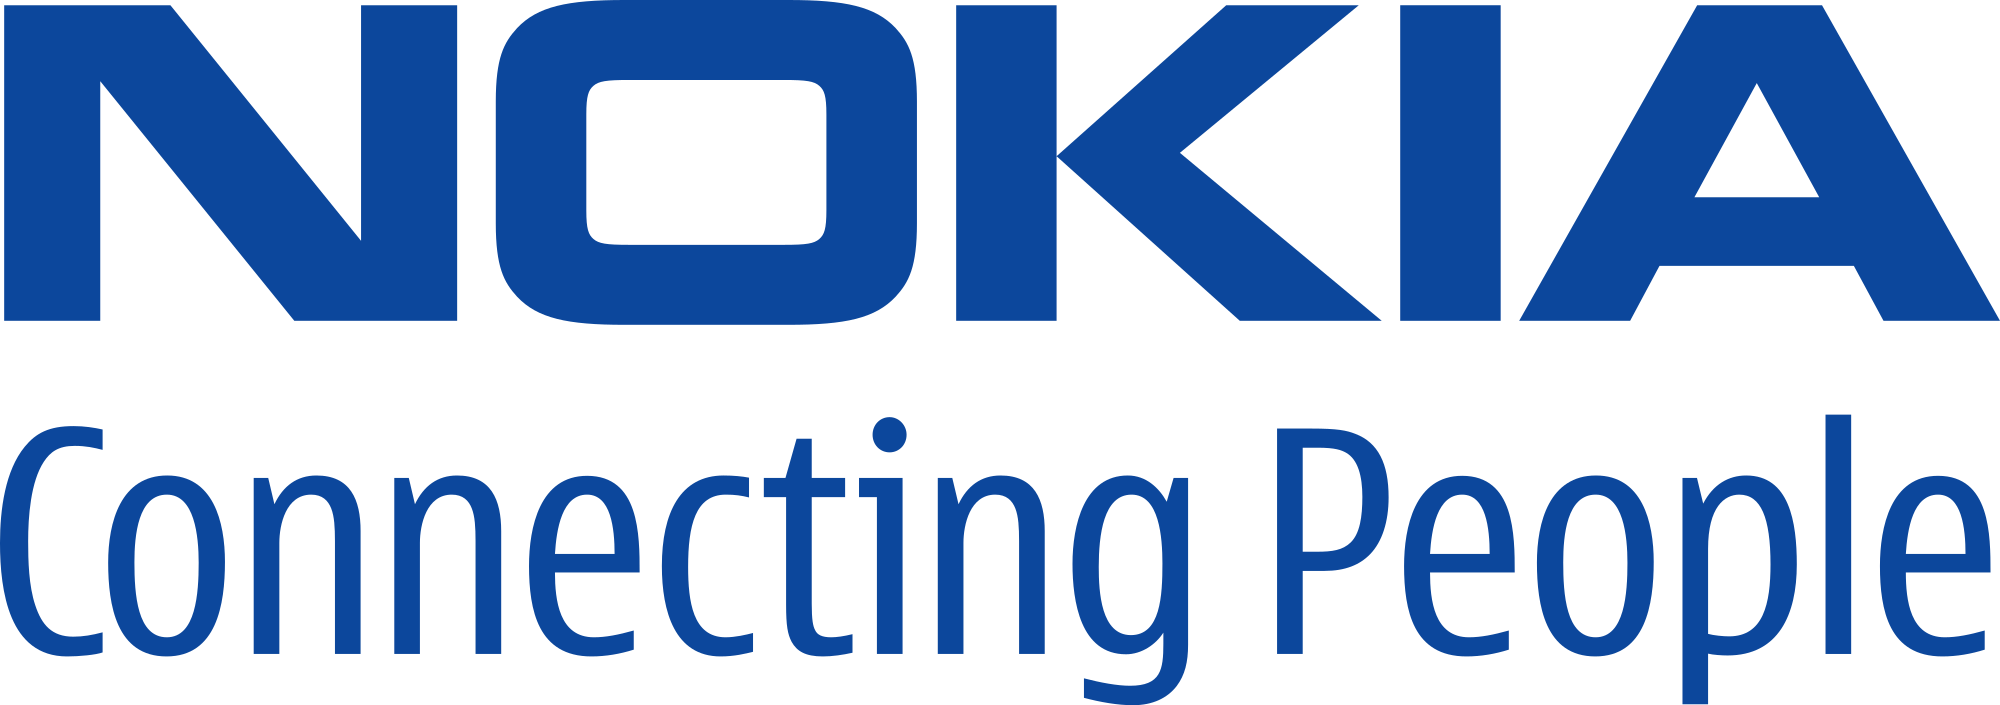 Nokia Corporation Logo - File:Nokian logo.svg - Wikimedia Commons